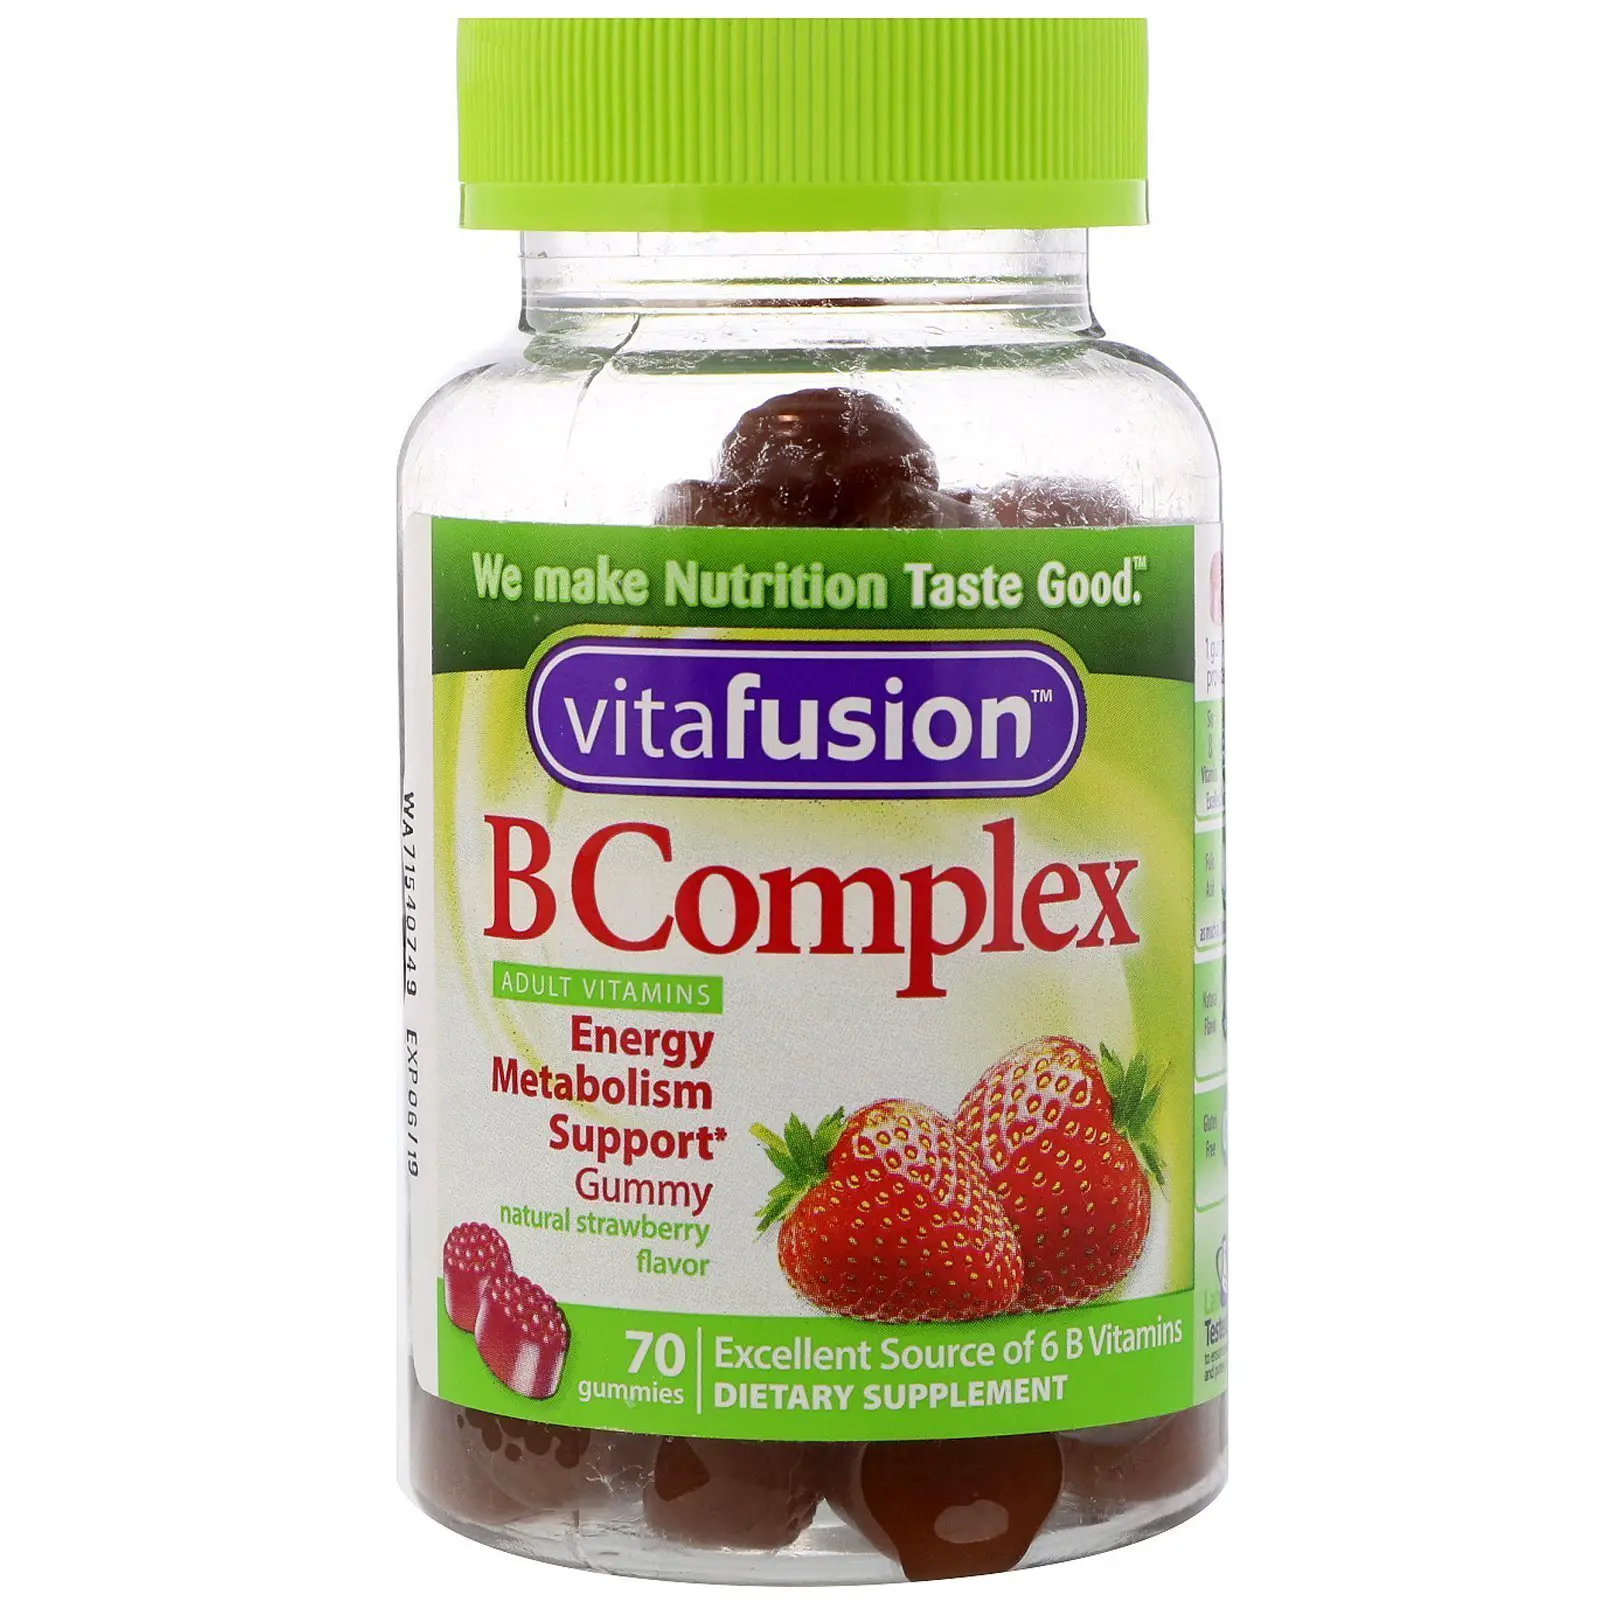 VitaFusion, B Complex Adult Vitamins, Natural Strawberry Flavor, 70 ...